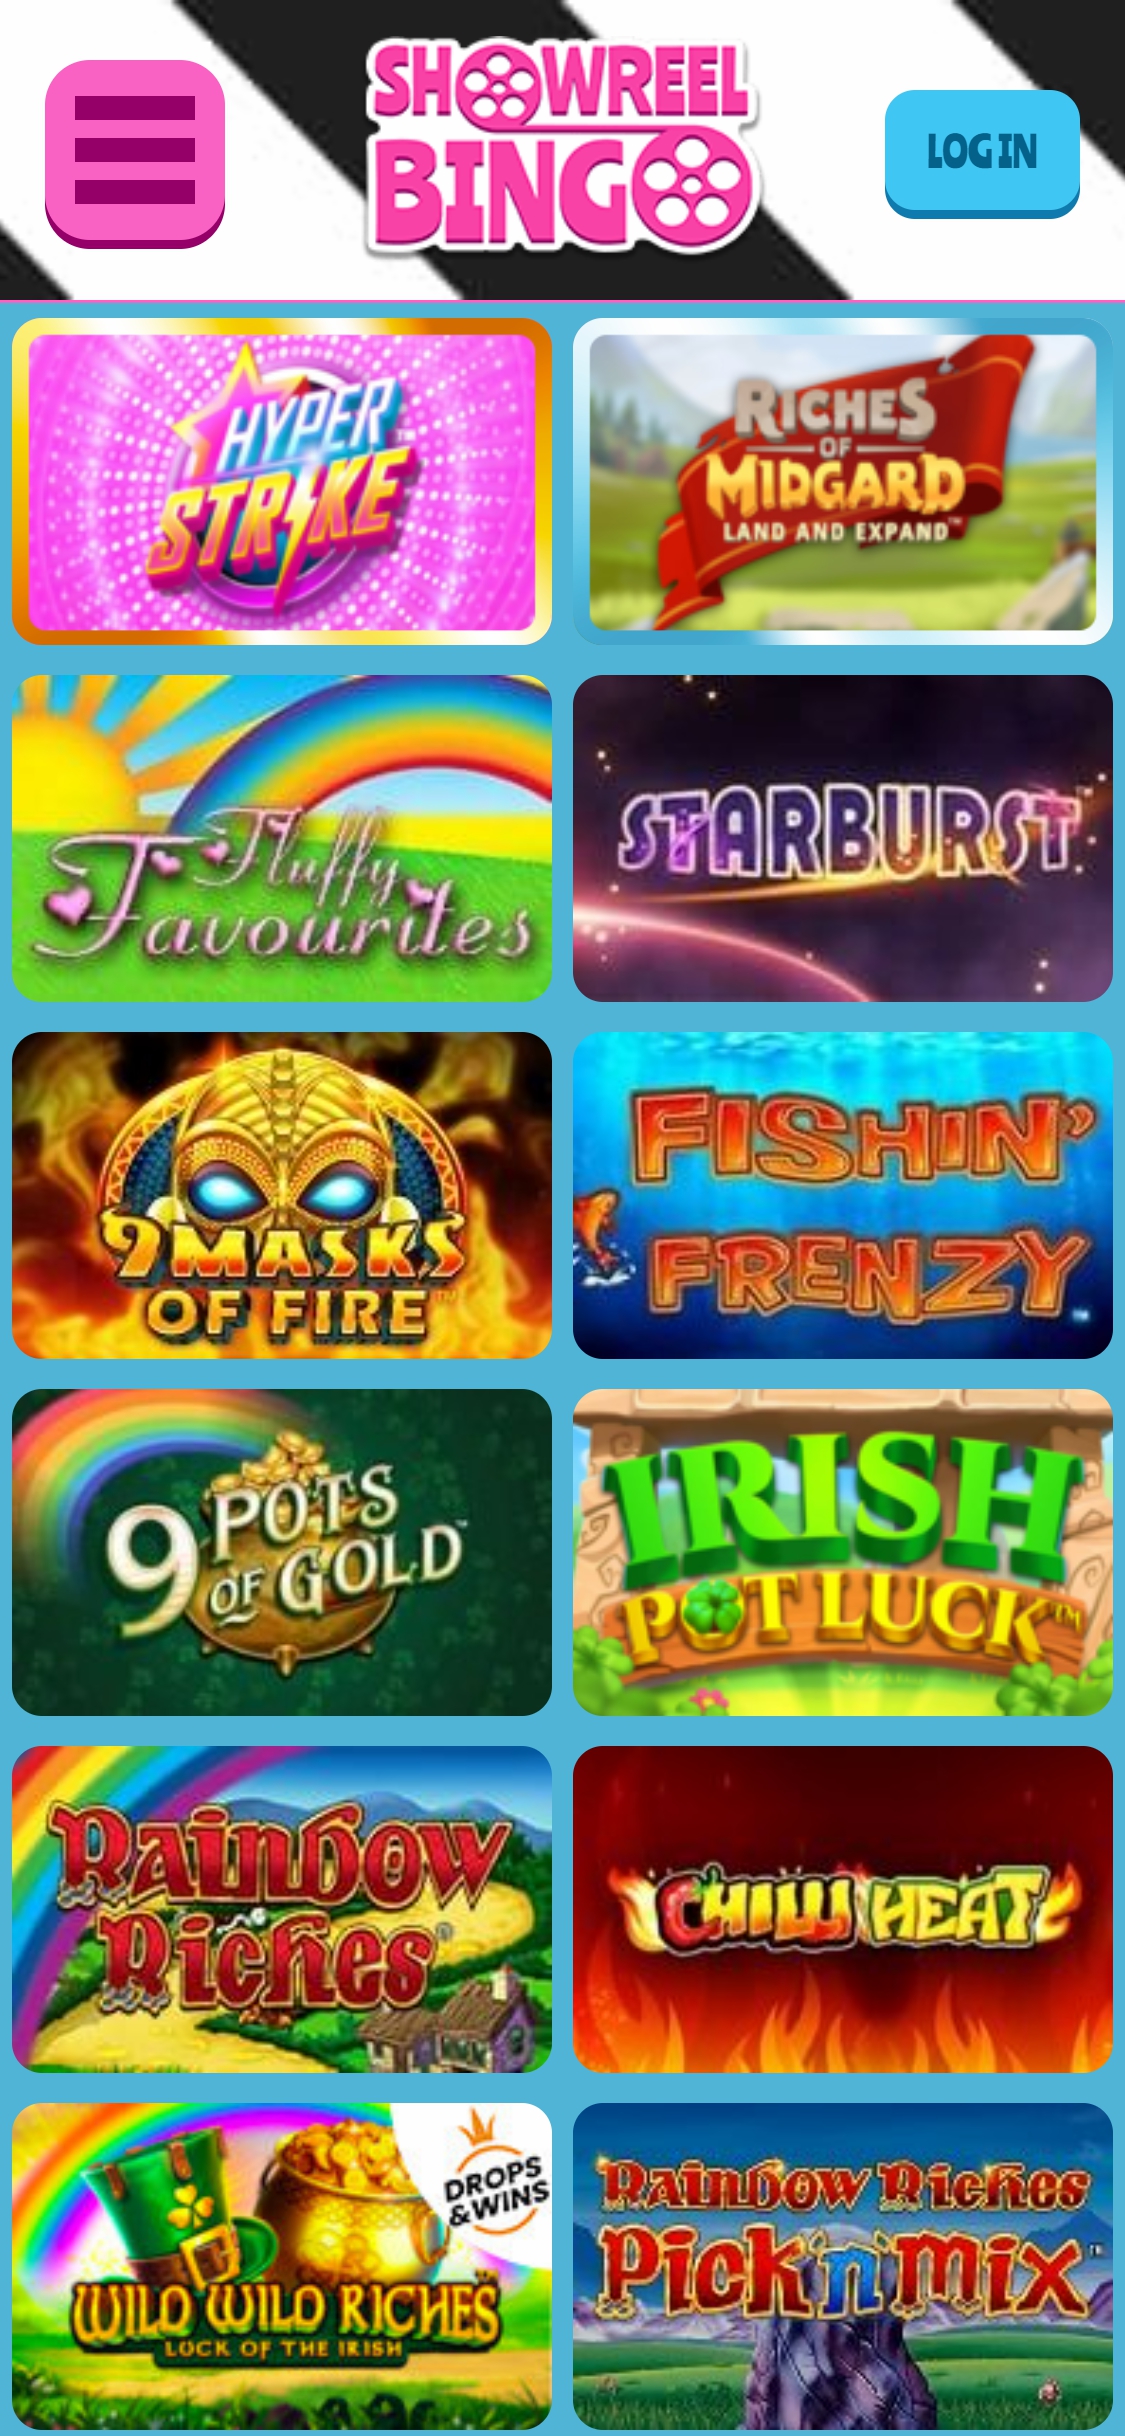 Showreel Bingo Casino Mobile Games Review